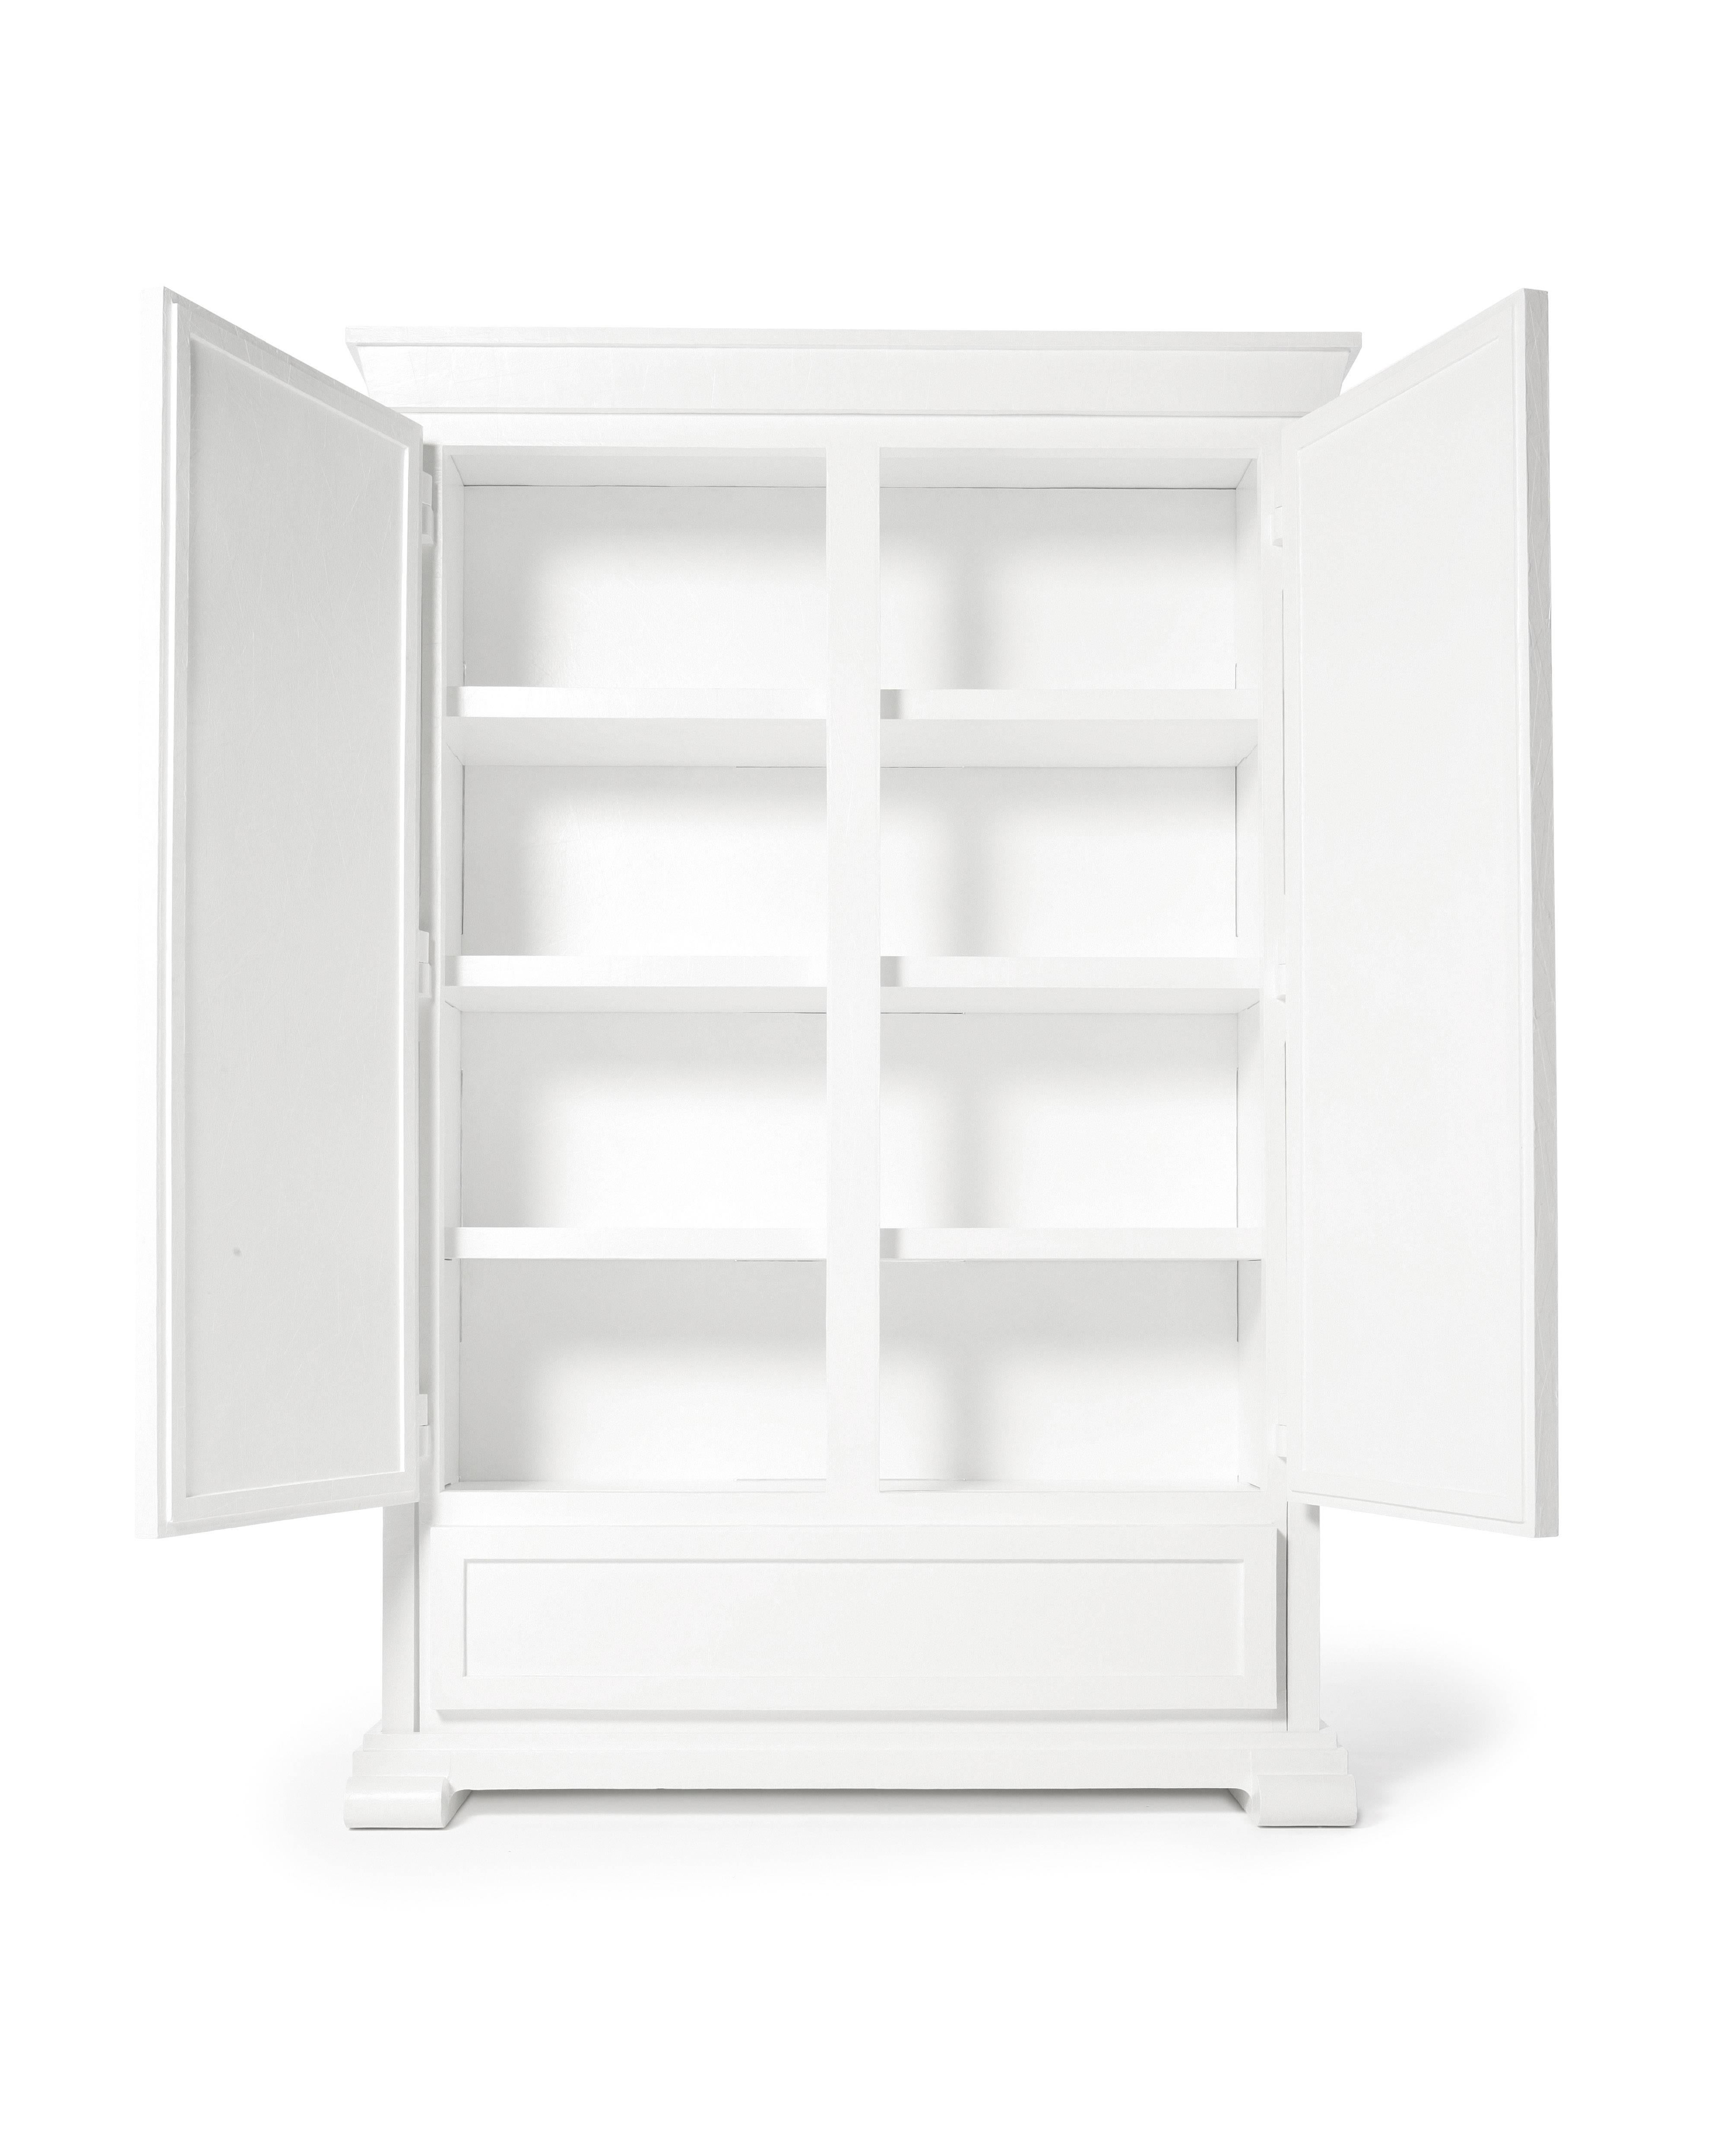 Modern Moooi Paper Cupboard in White by Studio Job For Sale